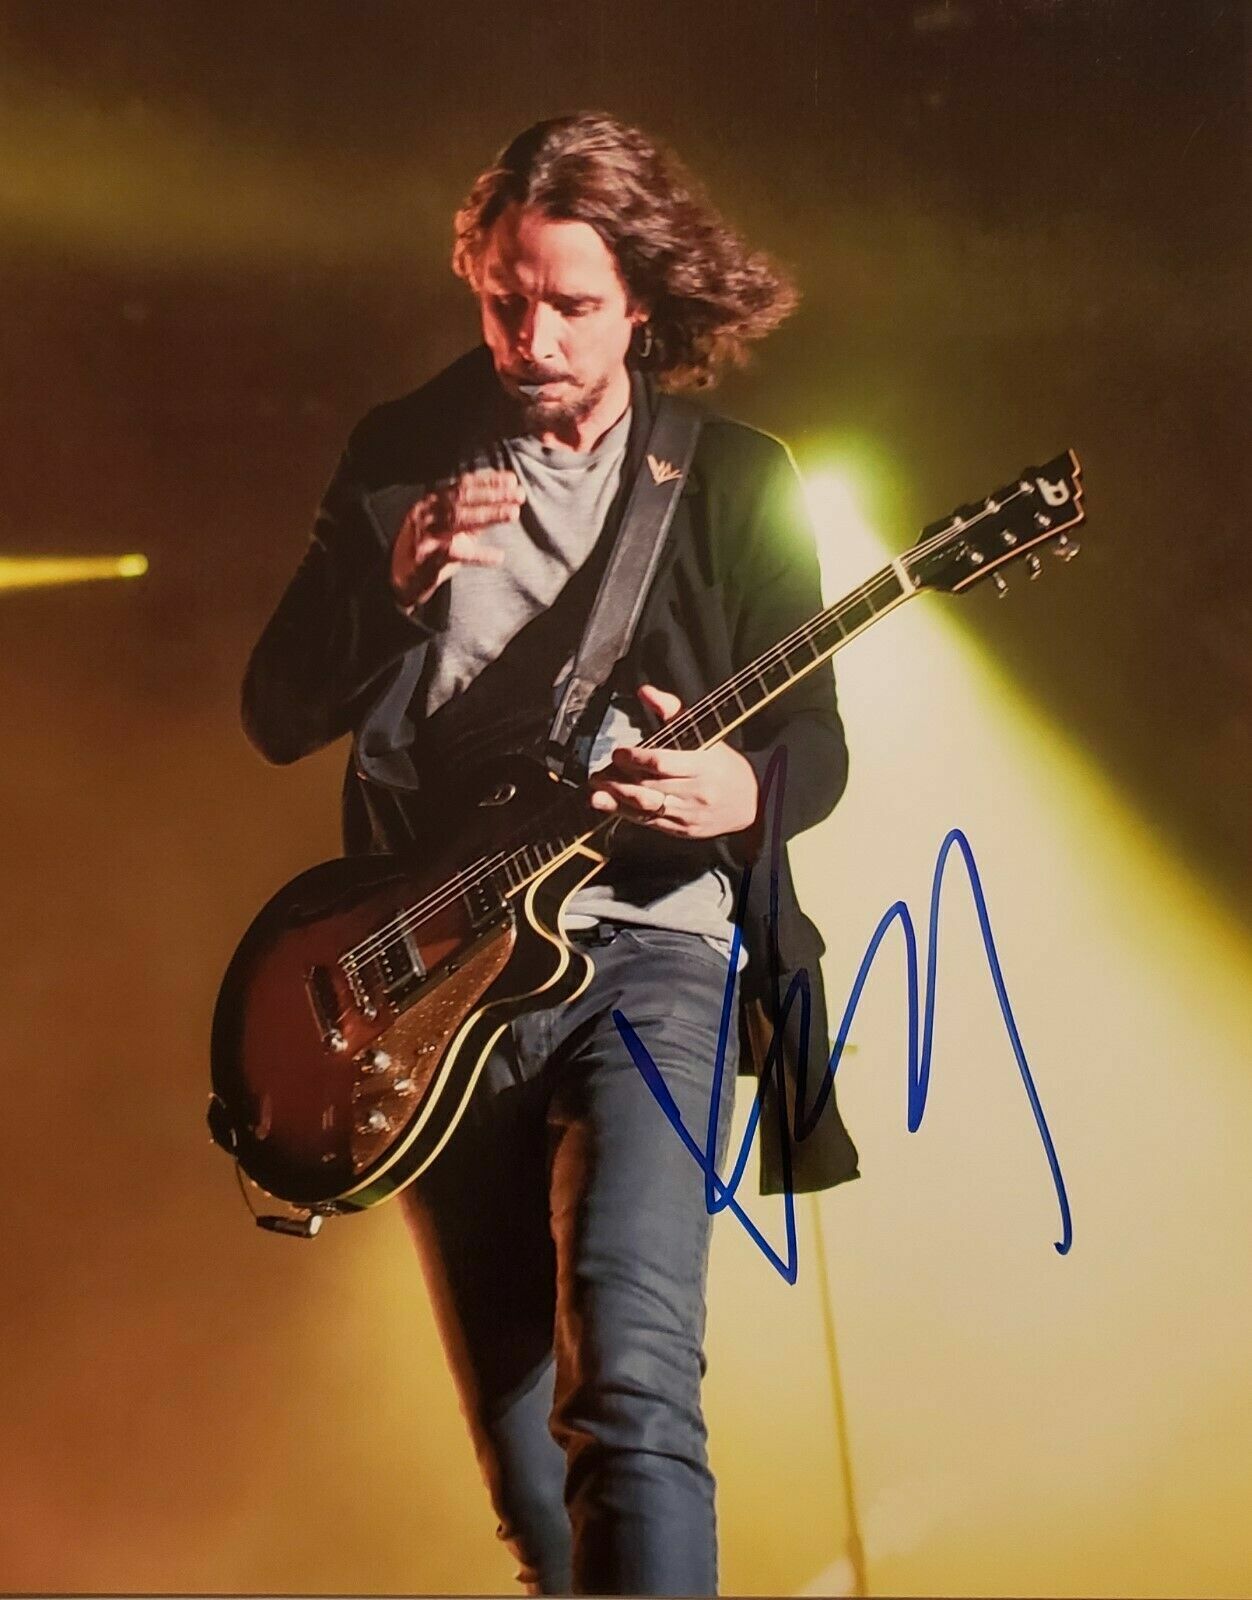 Chris Cornell Autographed Signed 8x10 Photo Poster painting ( Soundgarden ) REPRINT